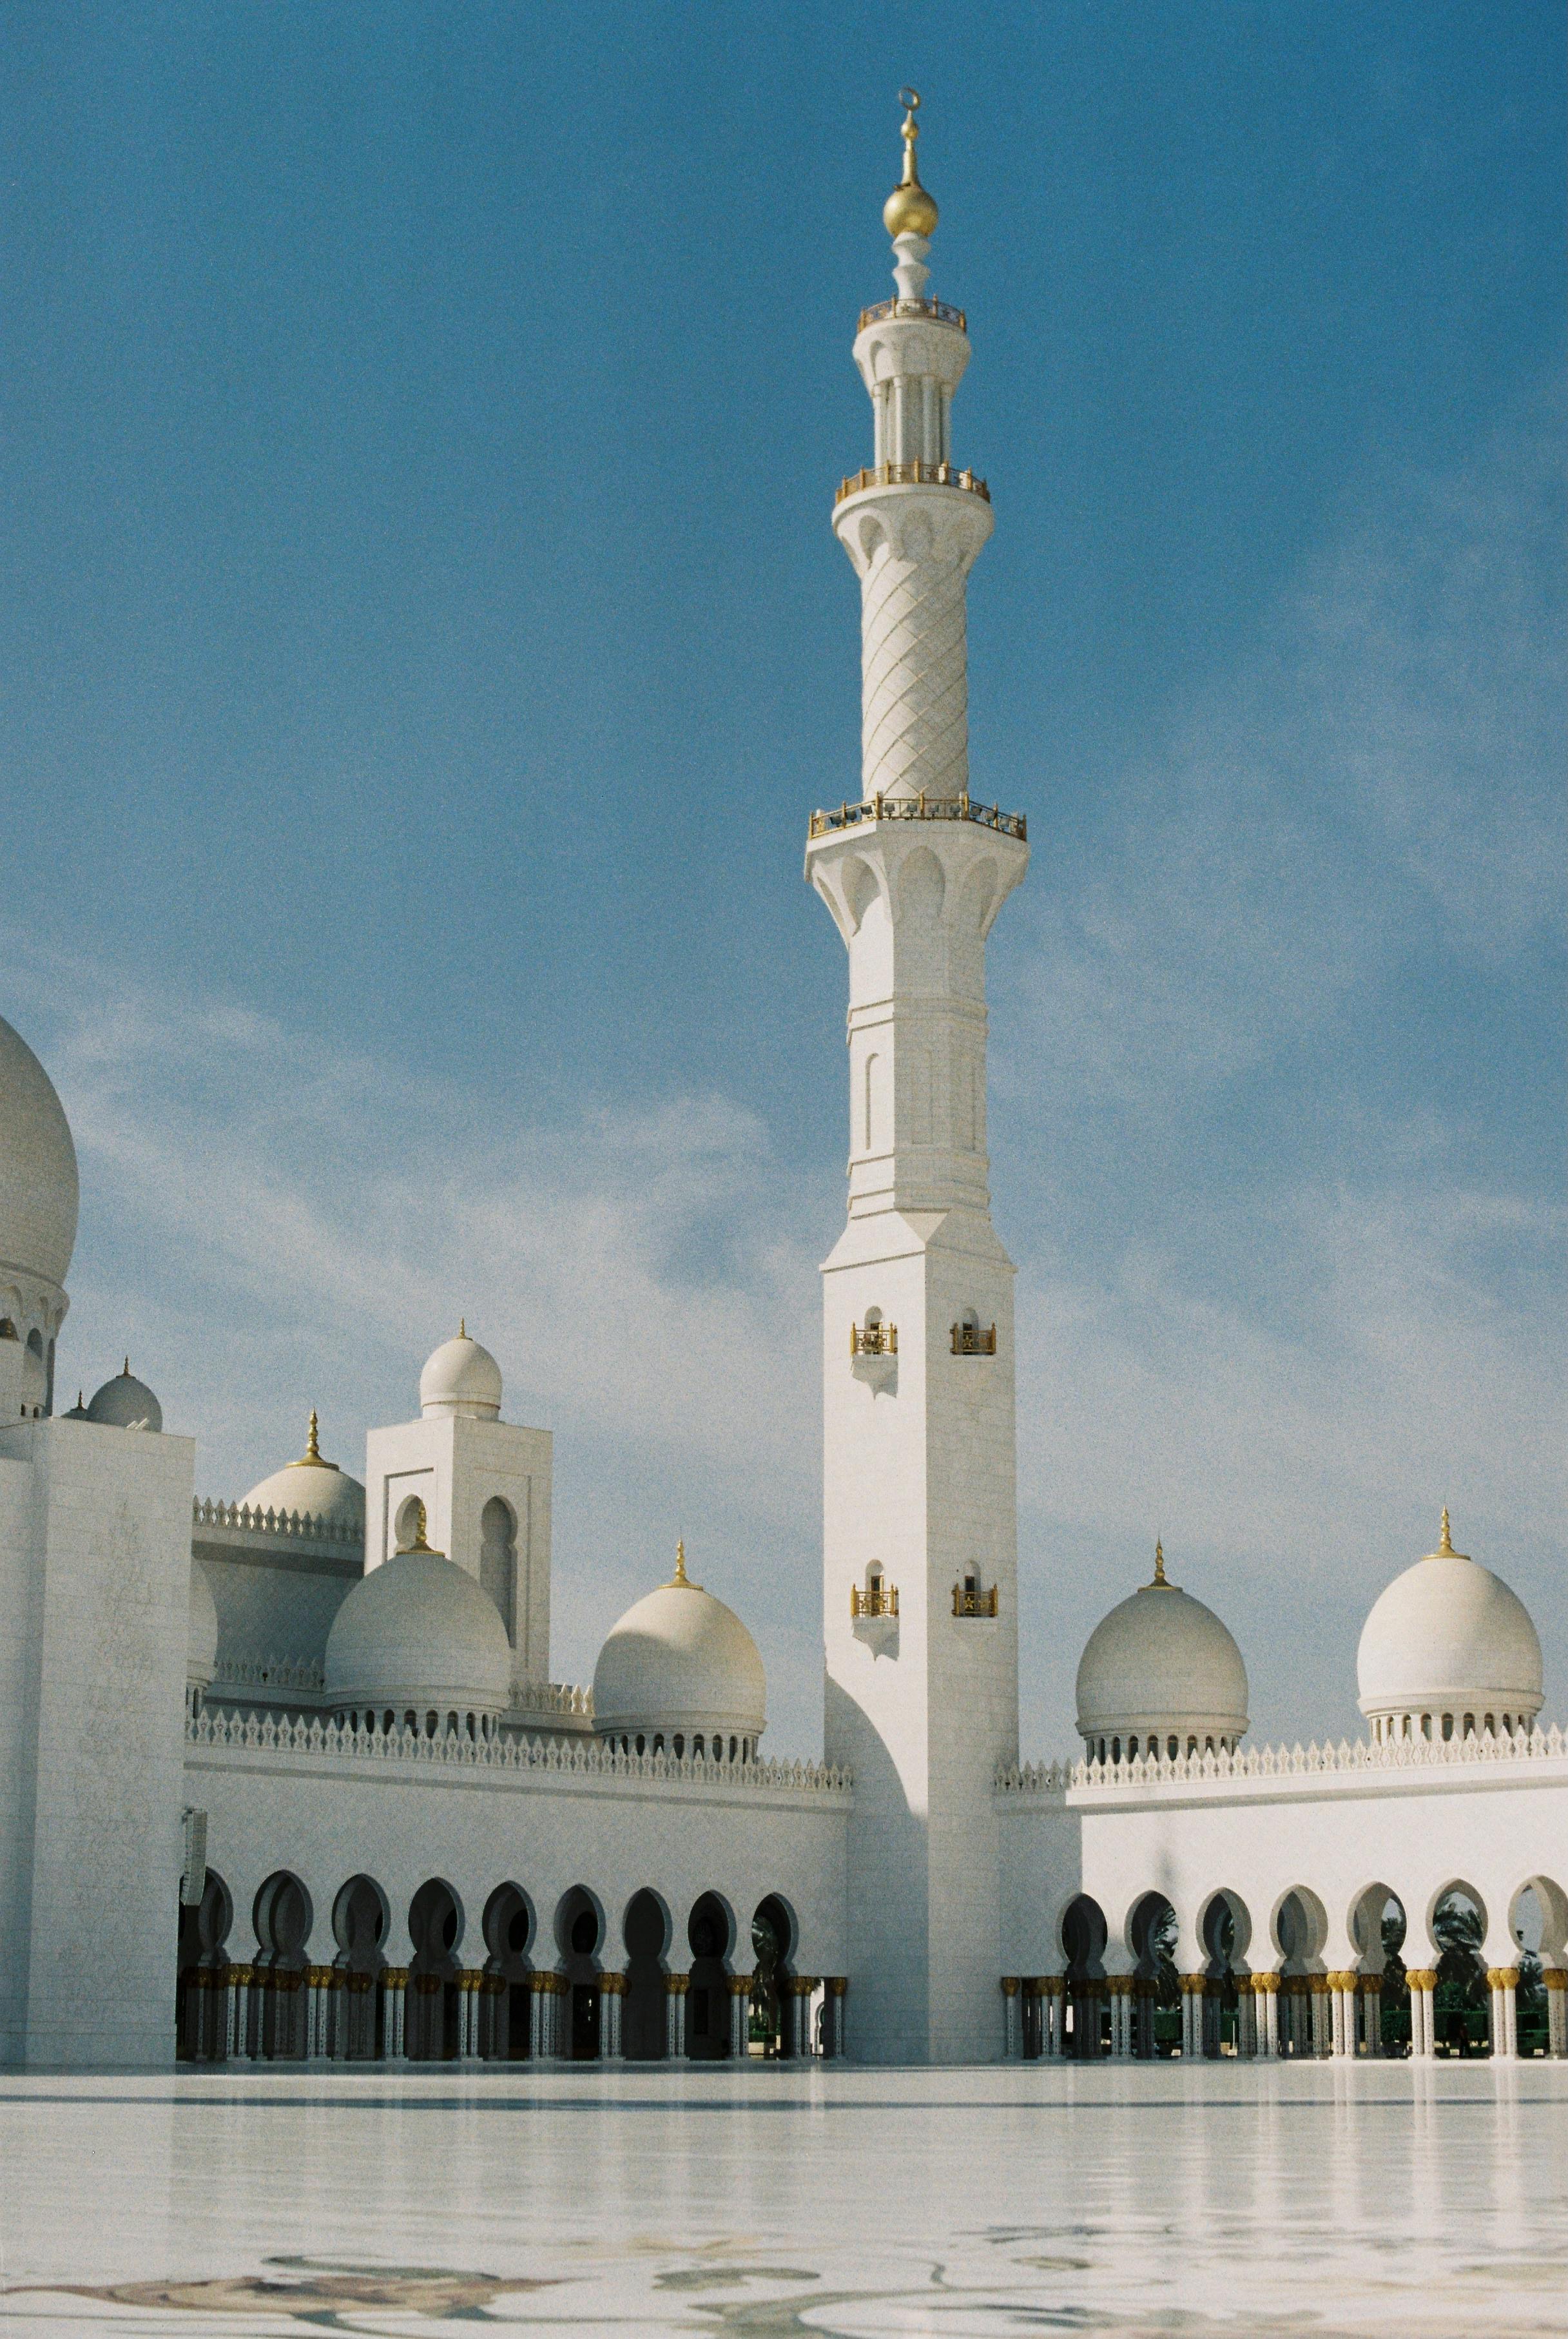 400+ Free Masjid & Mosque Images - Pixabay